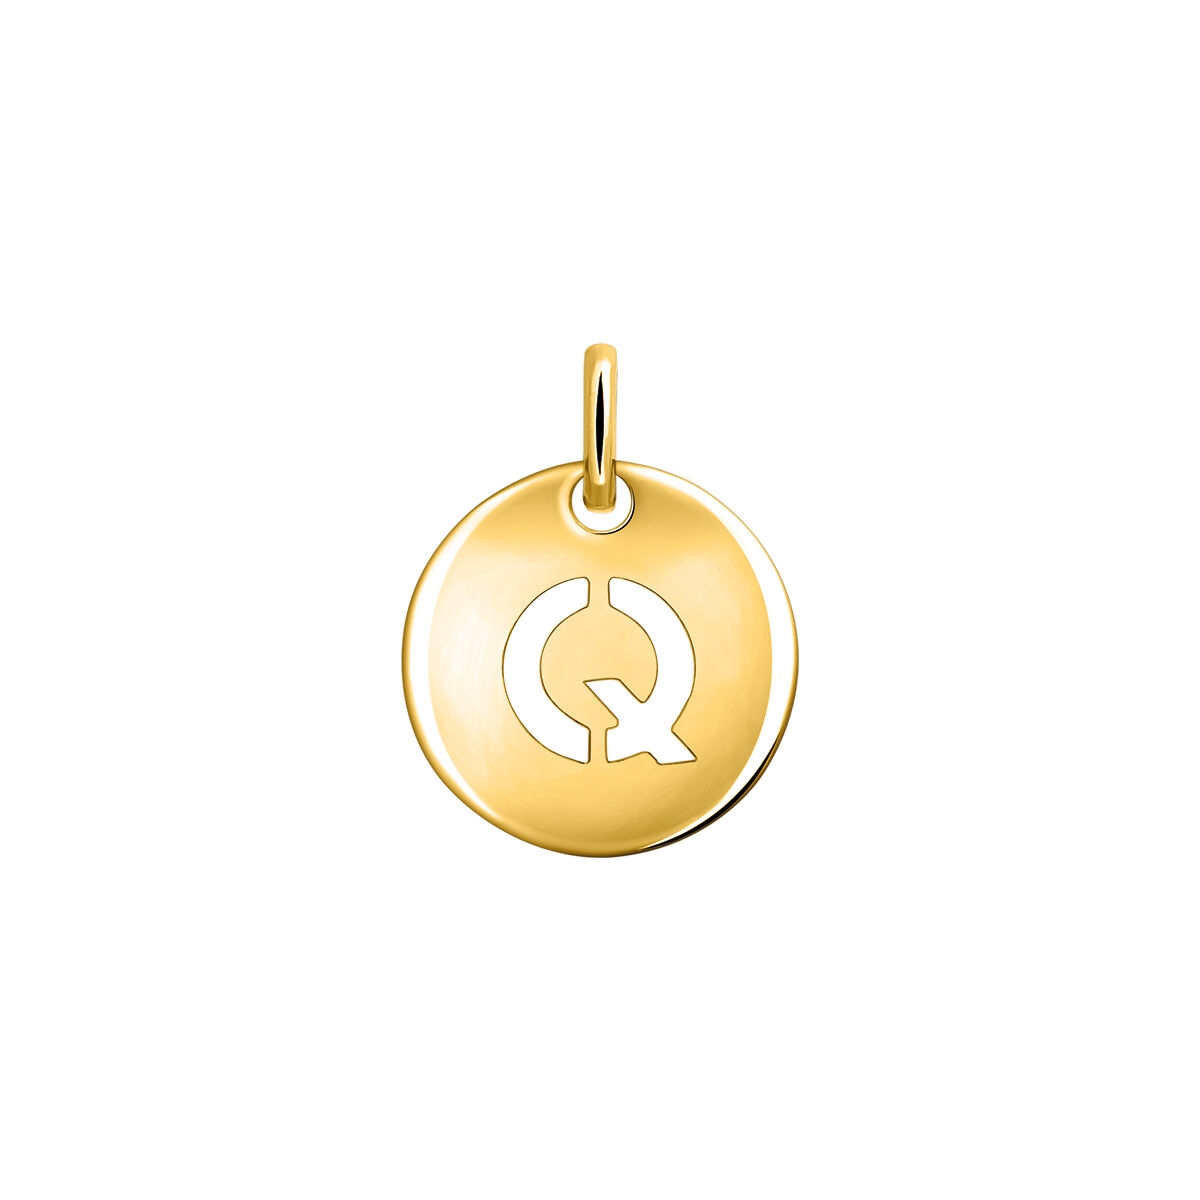 Charm medalla inicial Q plata recubierta oro  , J03455-02-Q, mainproduct